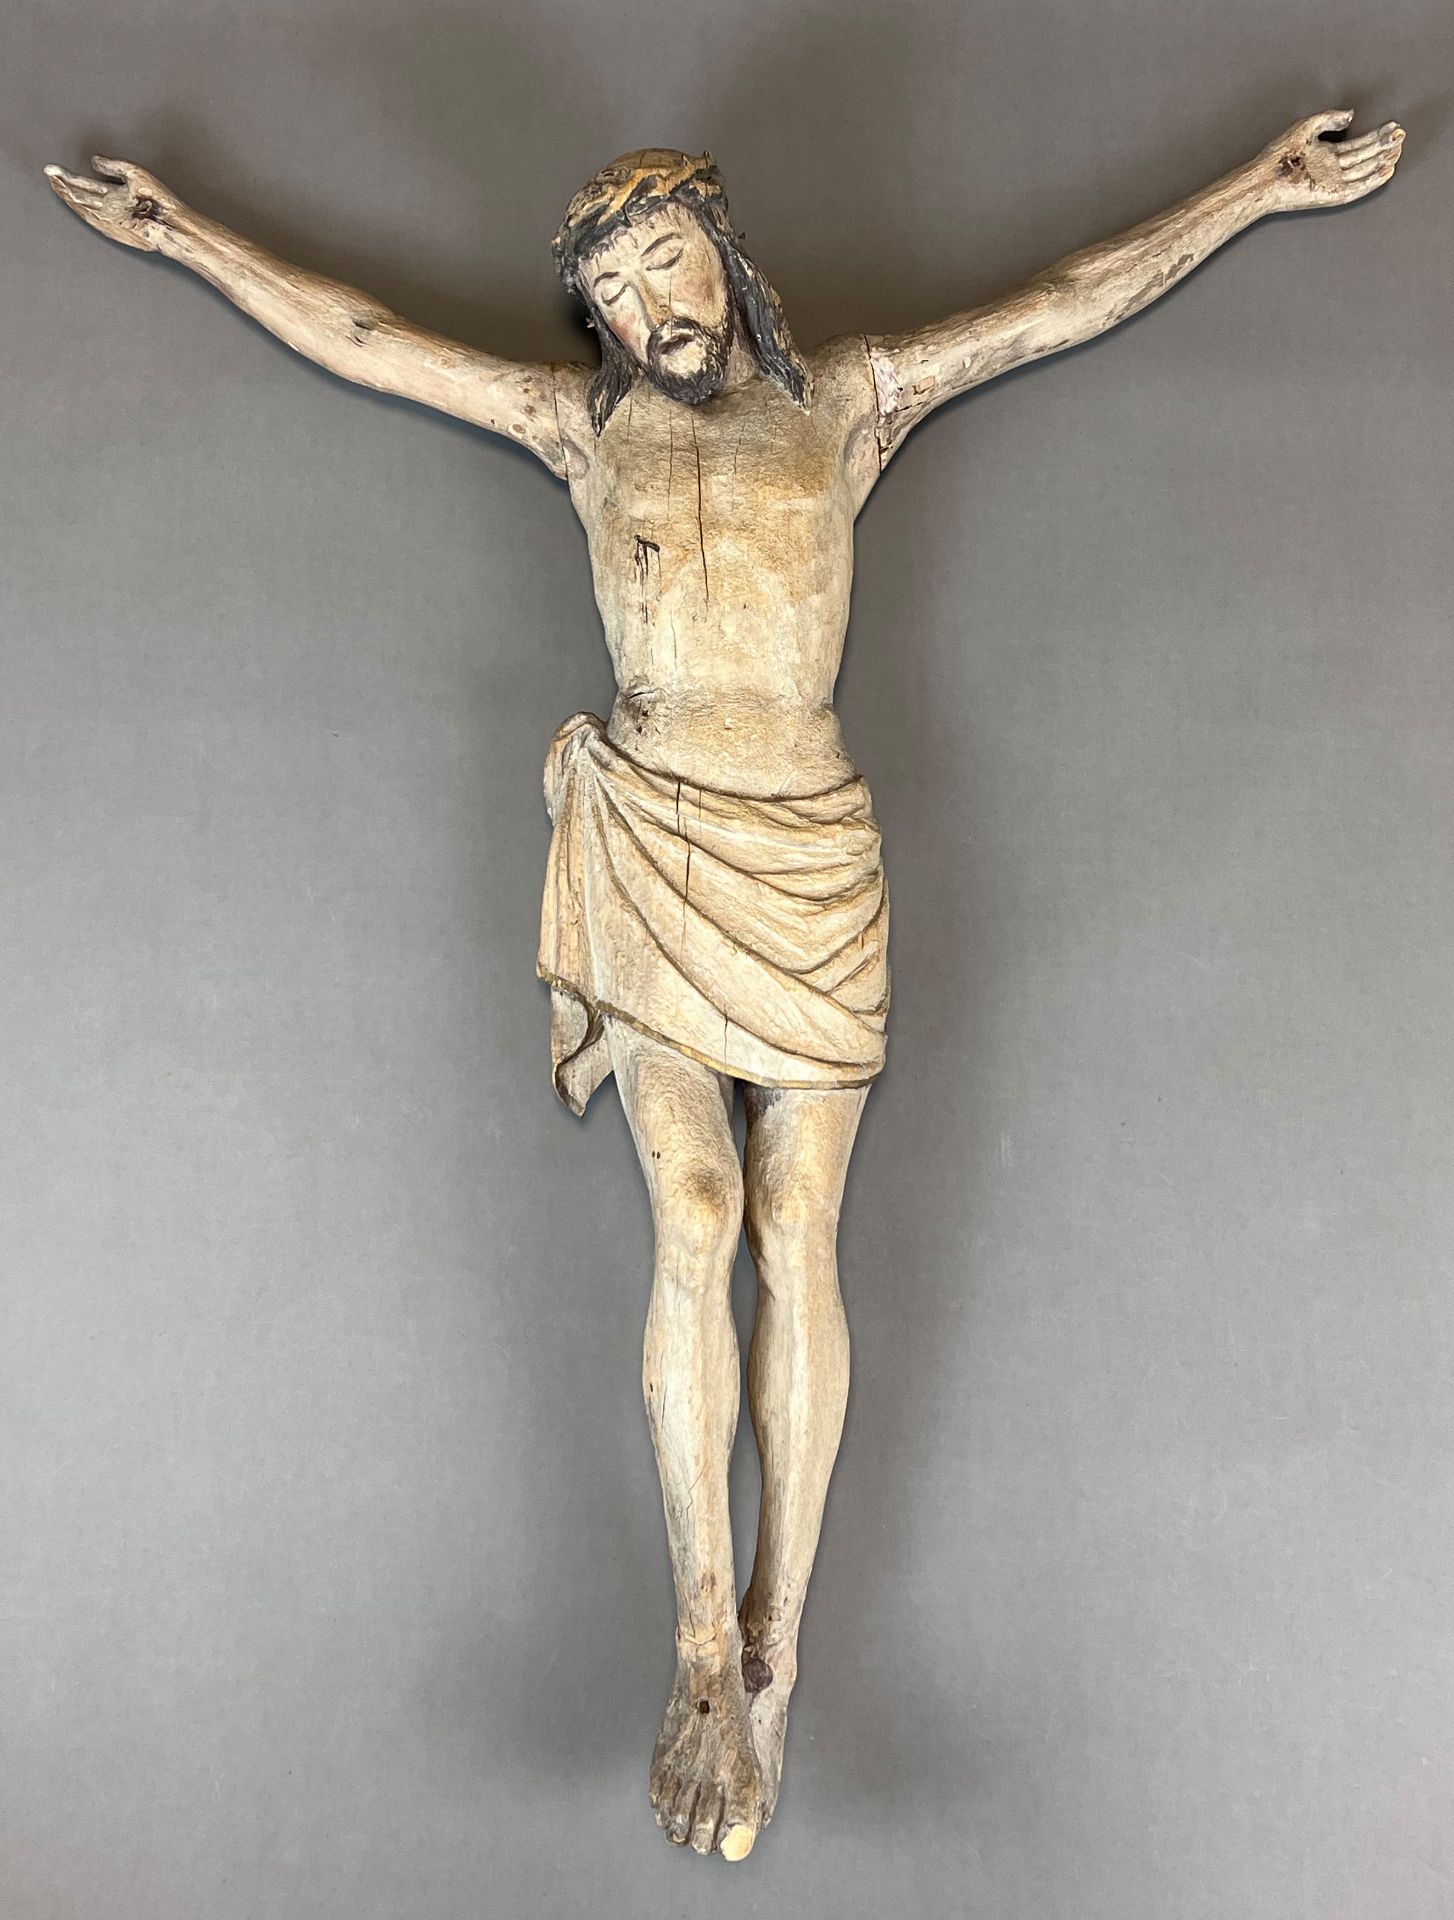 Holzfigur. Gekreuzigter Christus. 17. Jahrhundert. Süddeutschland.